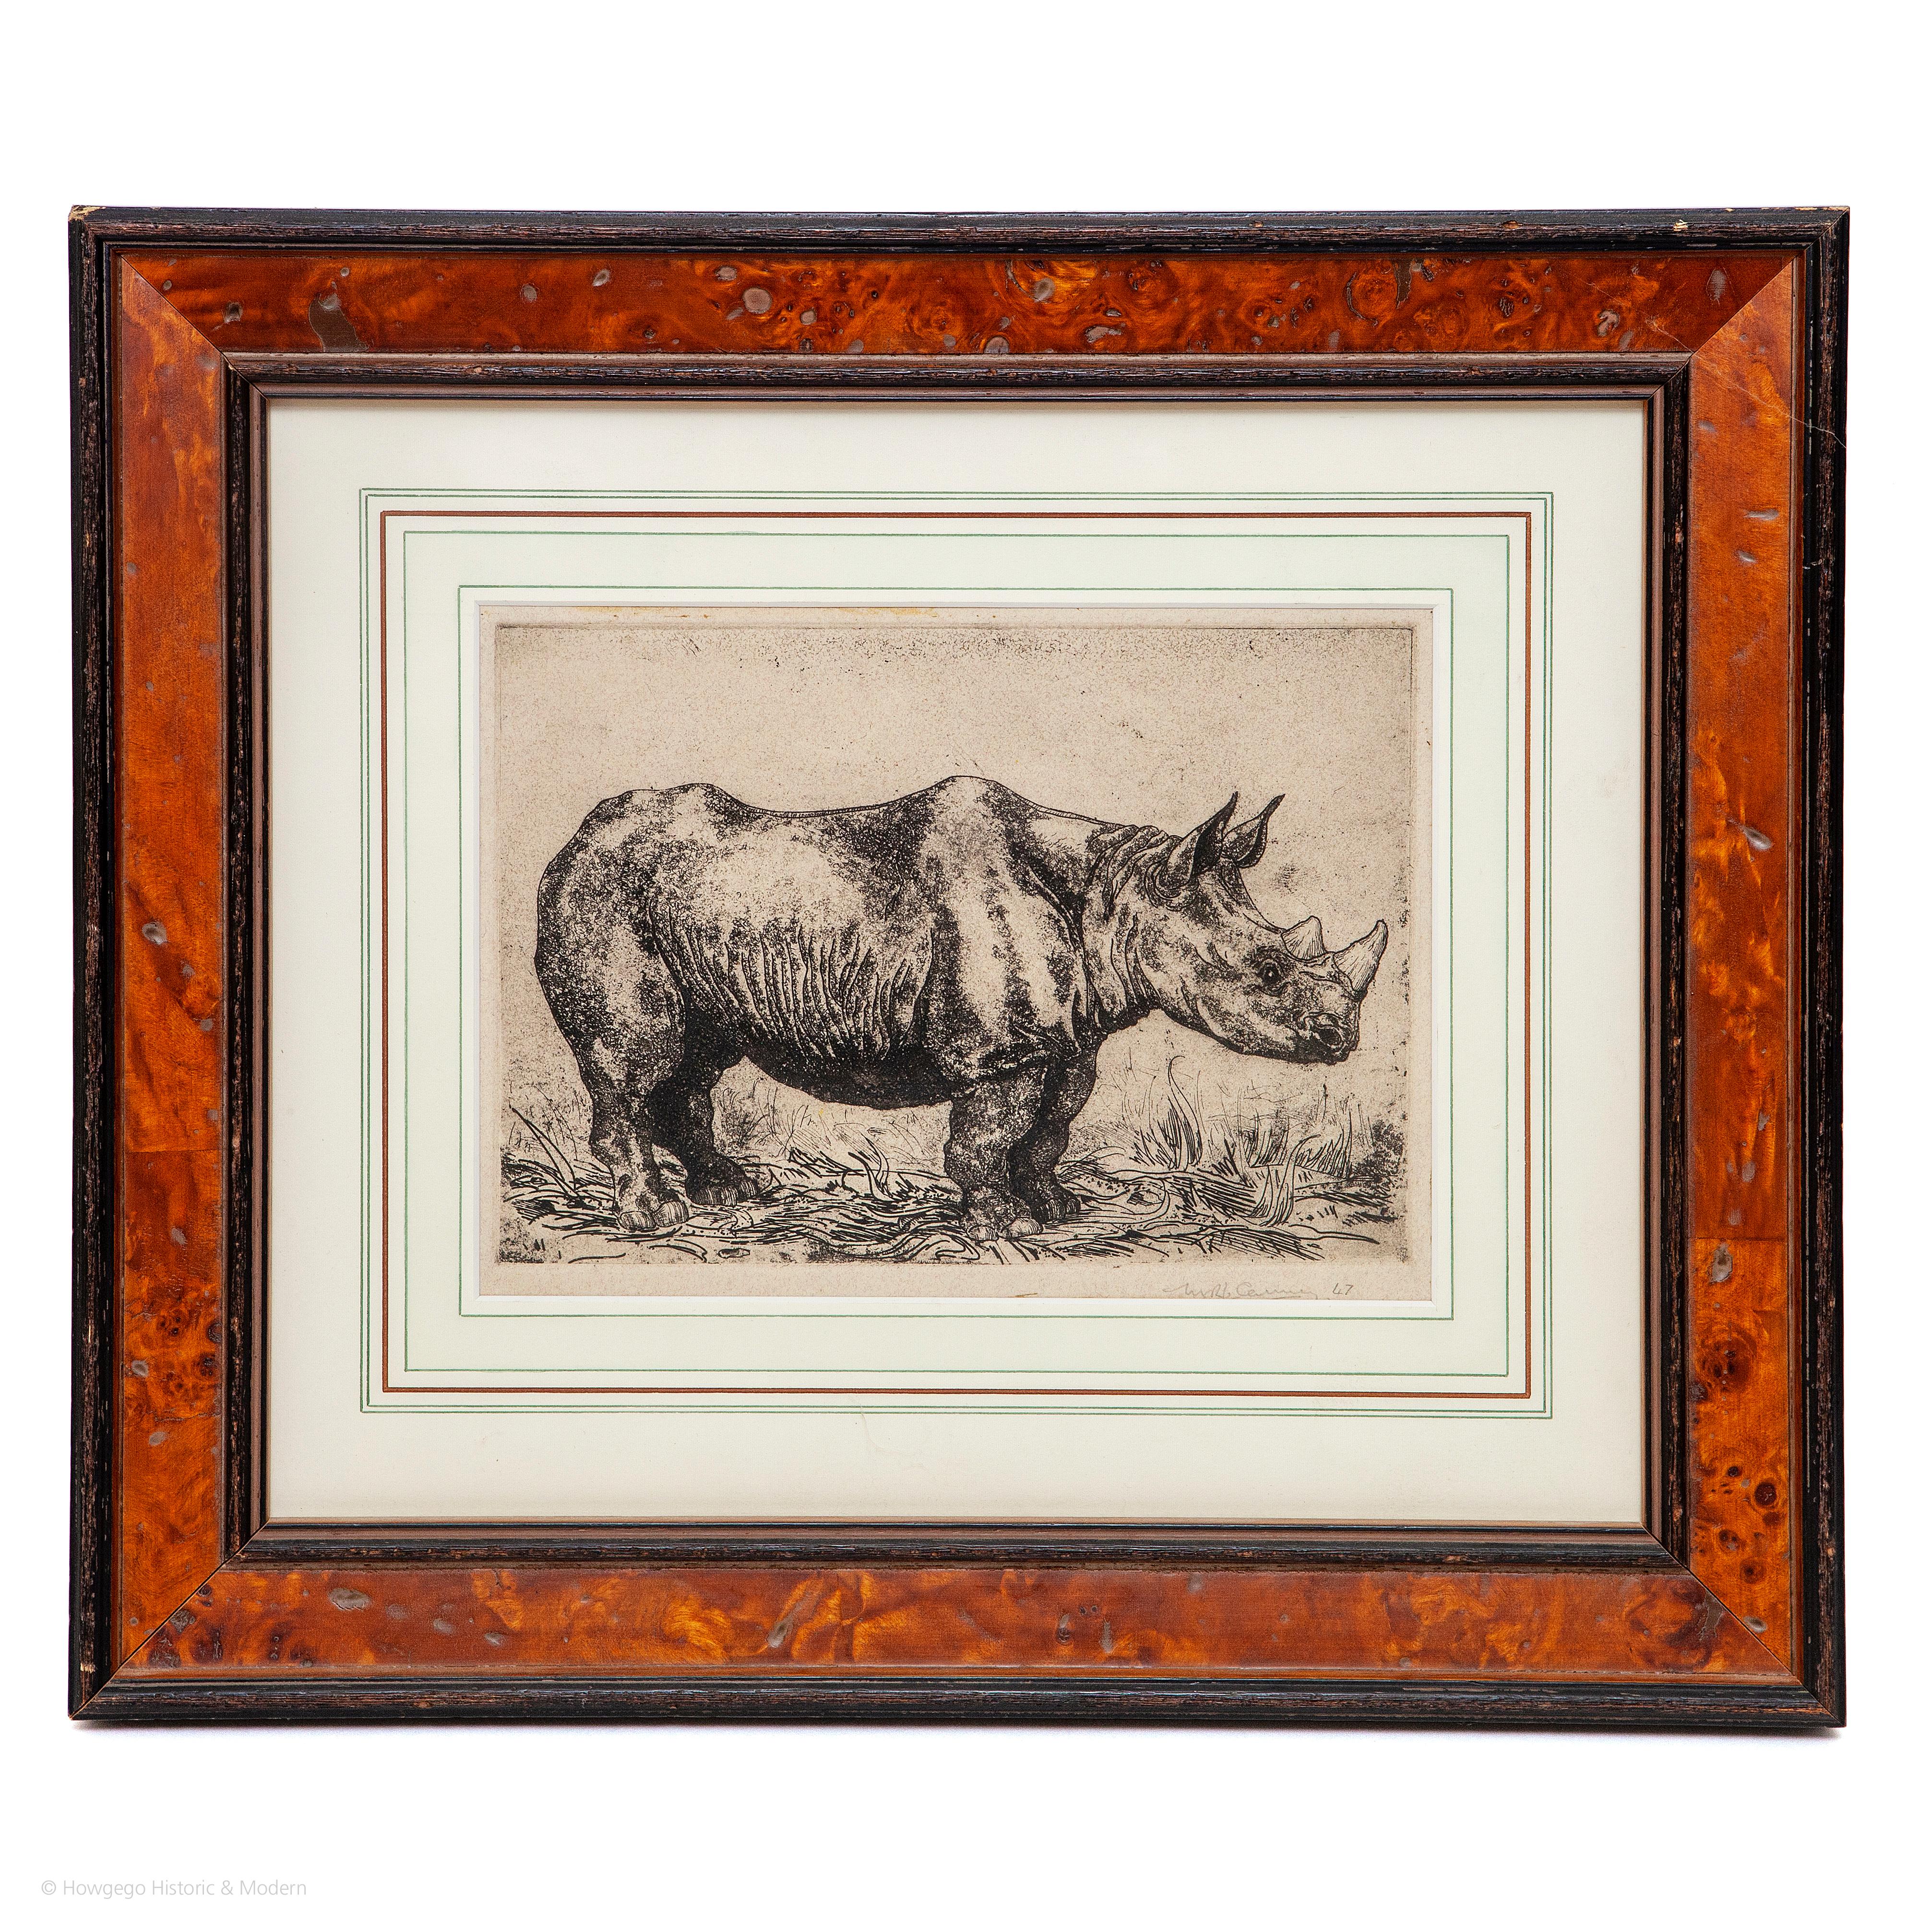 Michael Canney Rhinoceros Etching 1947  After Dürer's Rhinoceros 1515